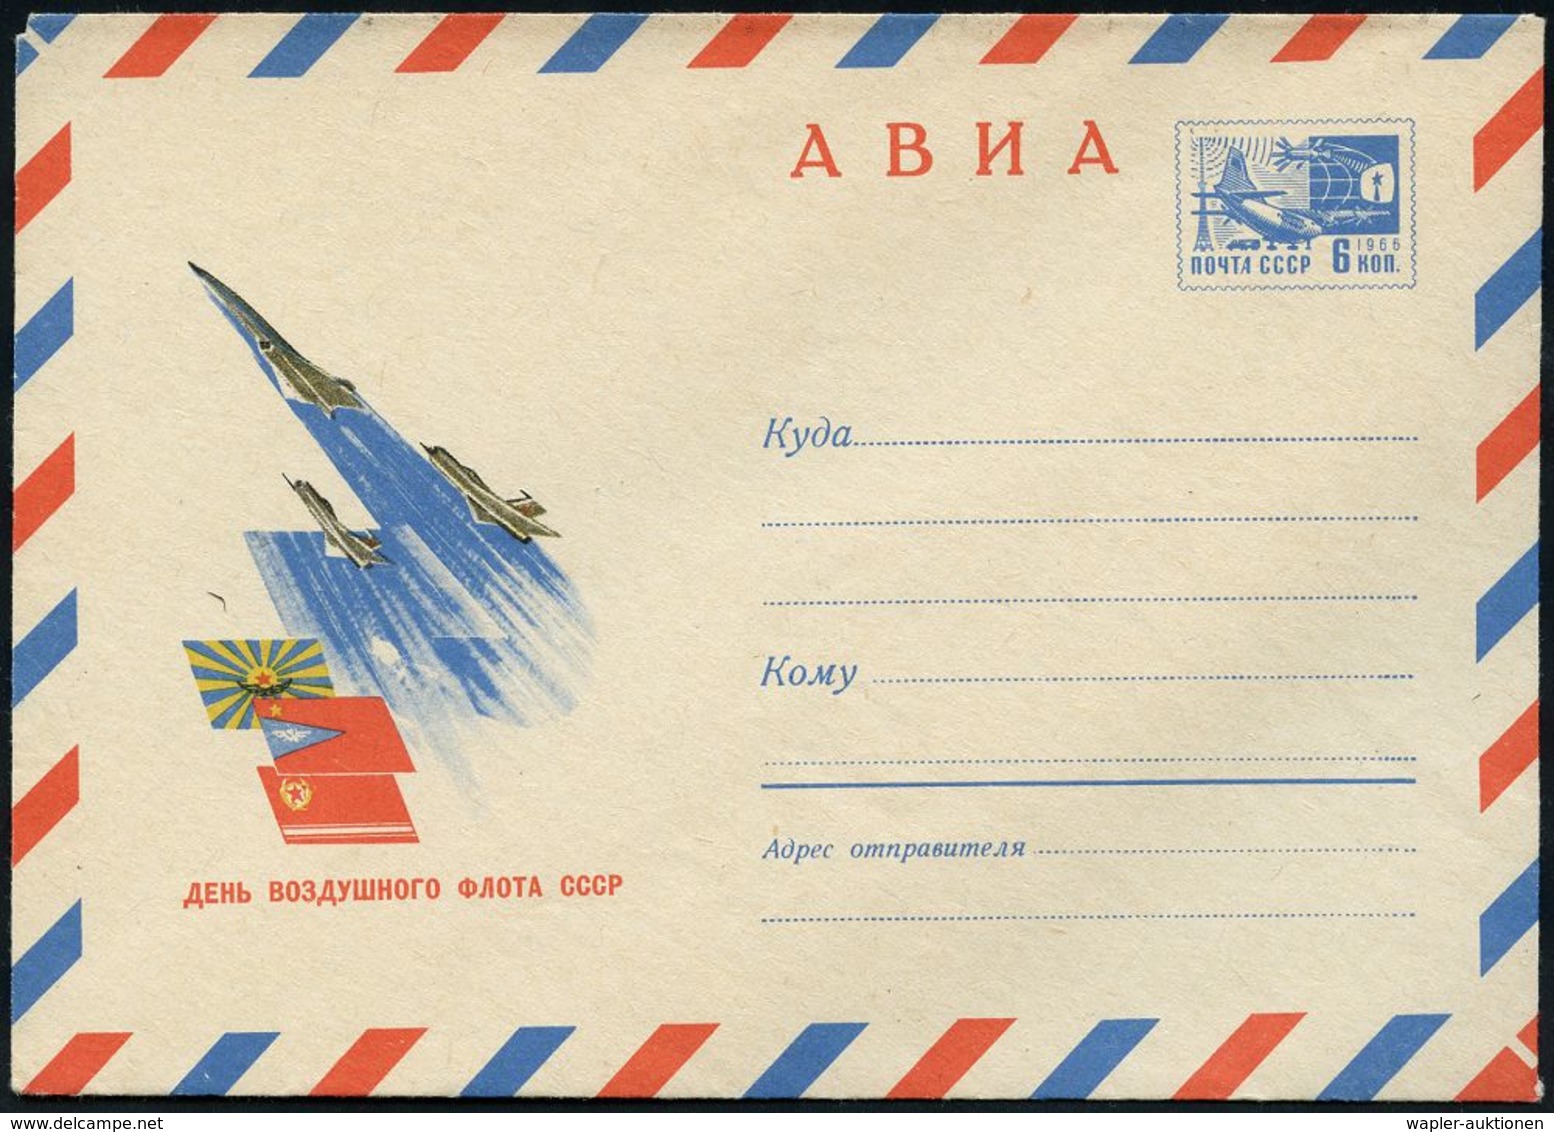 MILITÄRFLUGWESEN / MILITÄRFLUGZEUGE : UdSSR 1969 6 Kop. LU Luft- U. Raumfahrt, Blau: Tag Der Sowjet. Luftflotte = Übersc - Flugzeuge